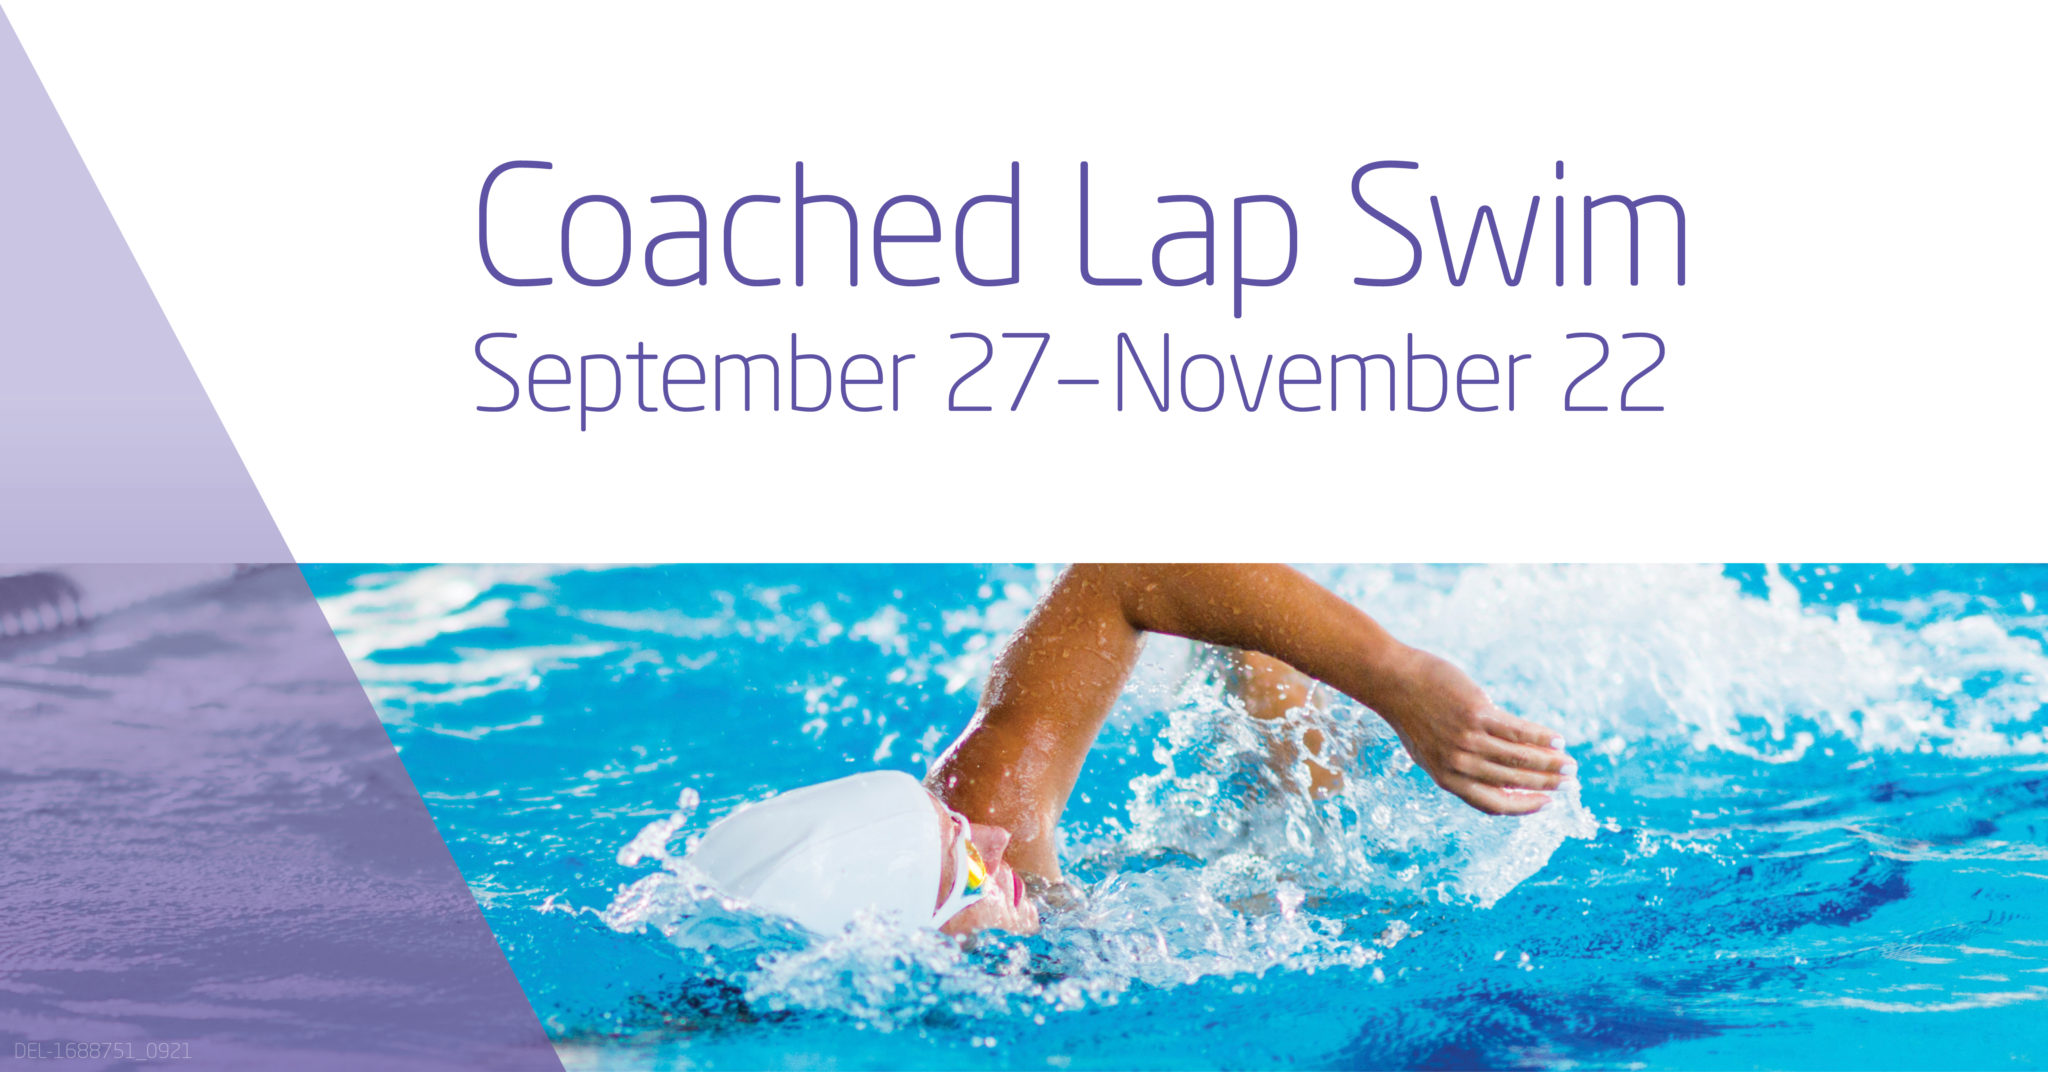 Coached Lap Swim. September 27 - November 22